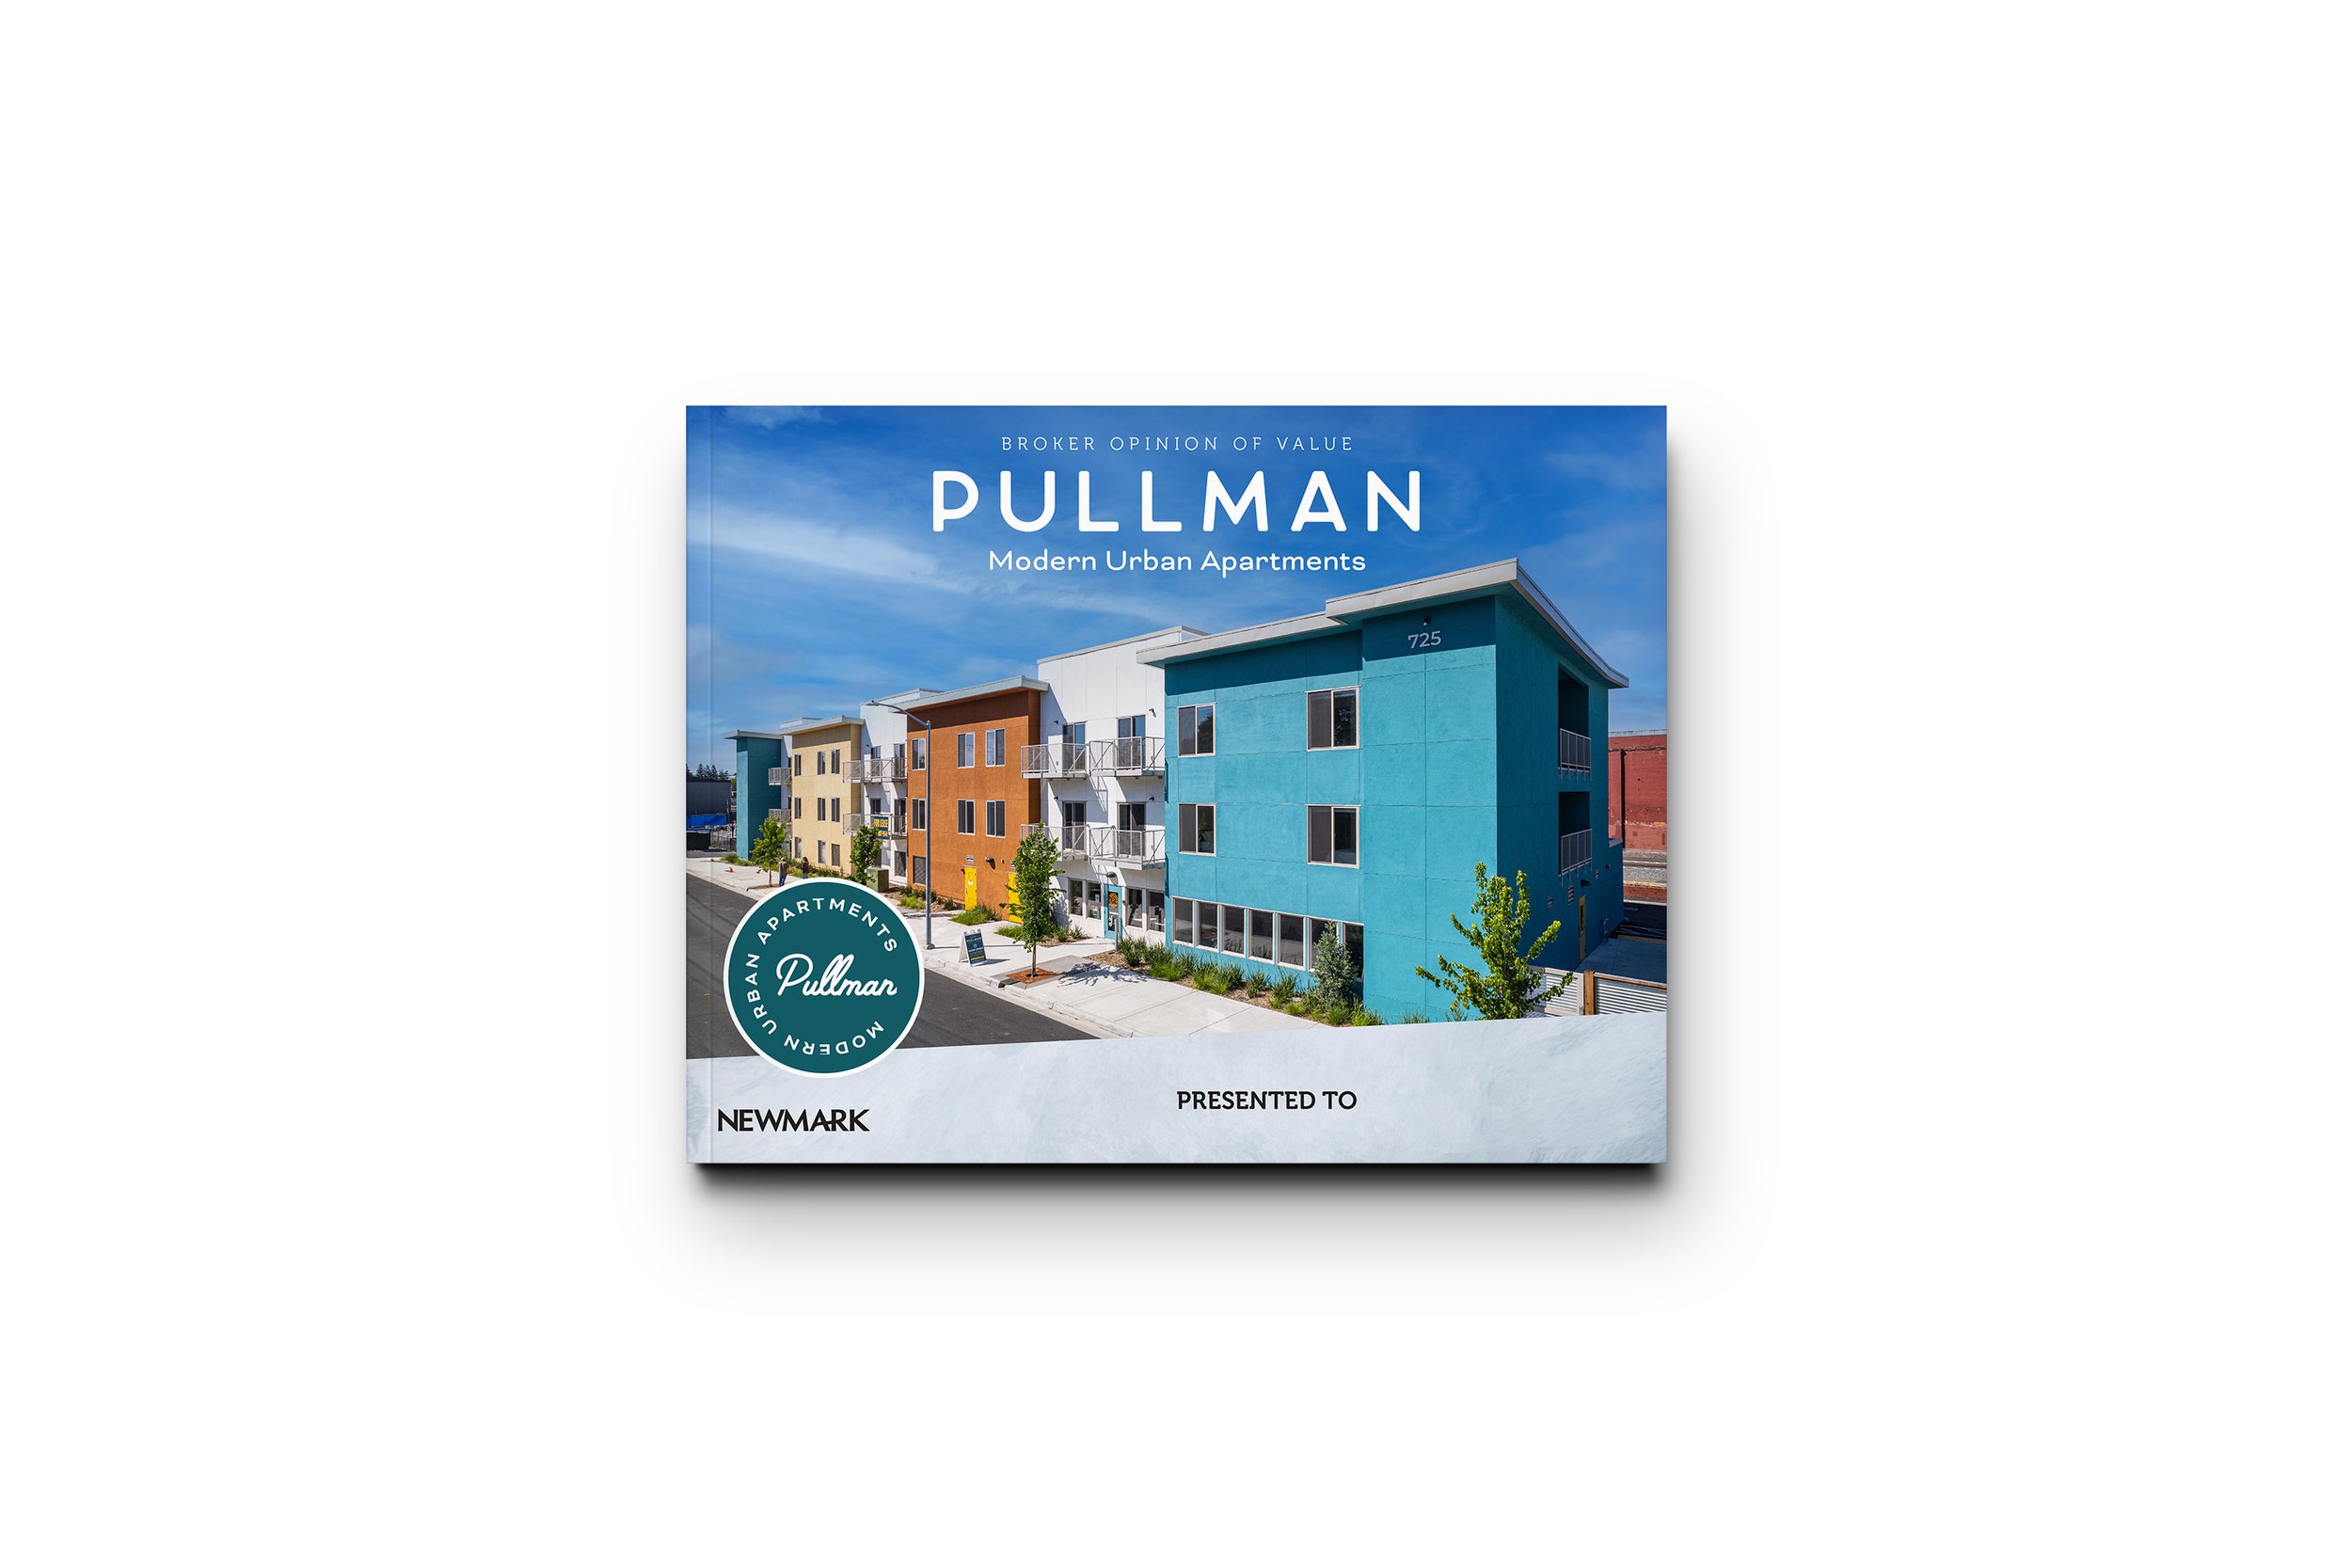 pullman-cover 2.jpg